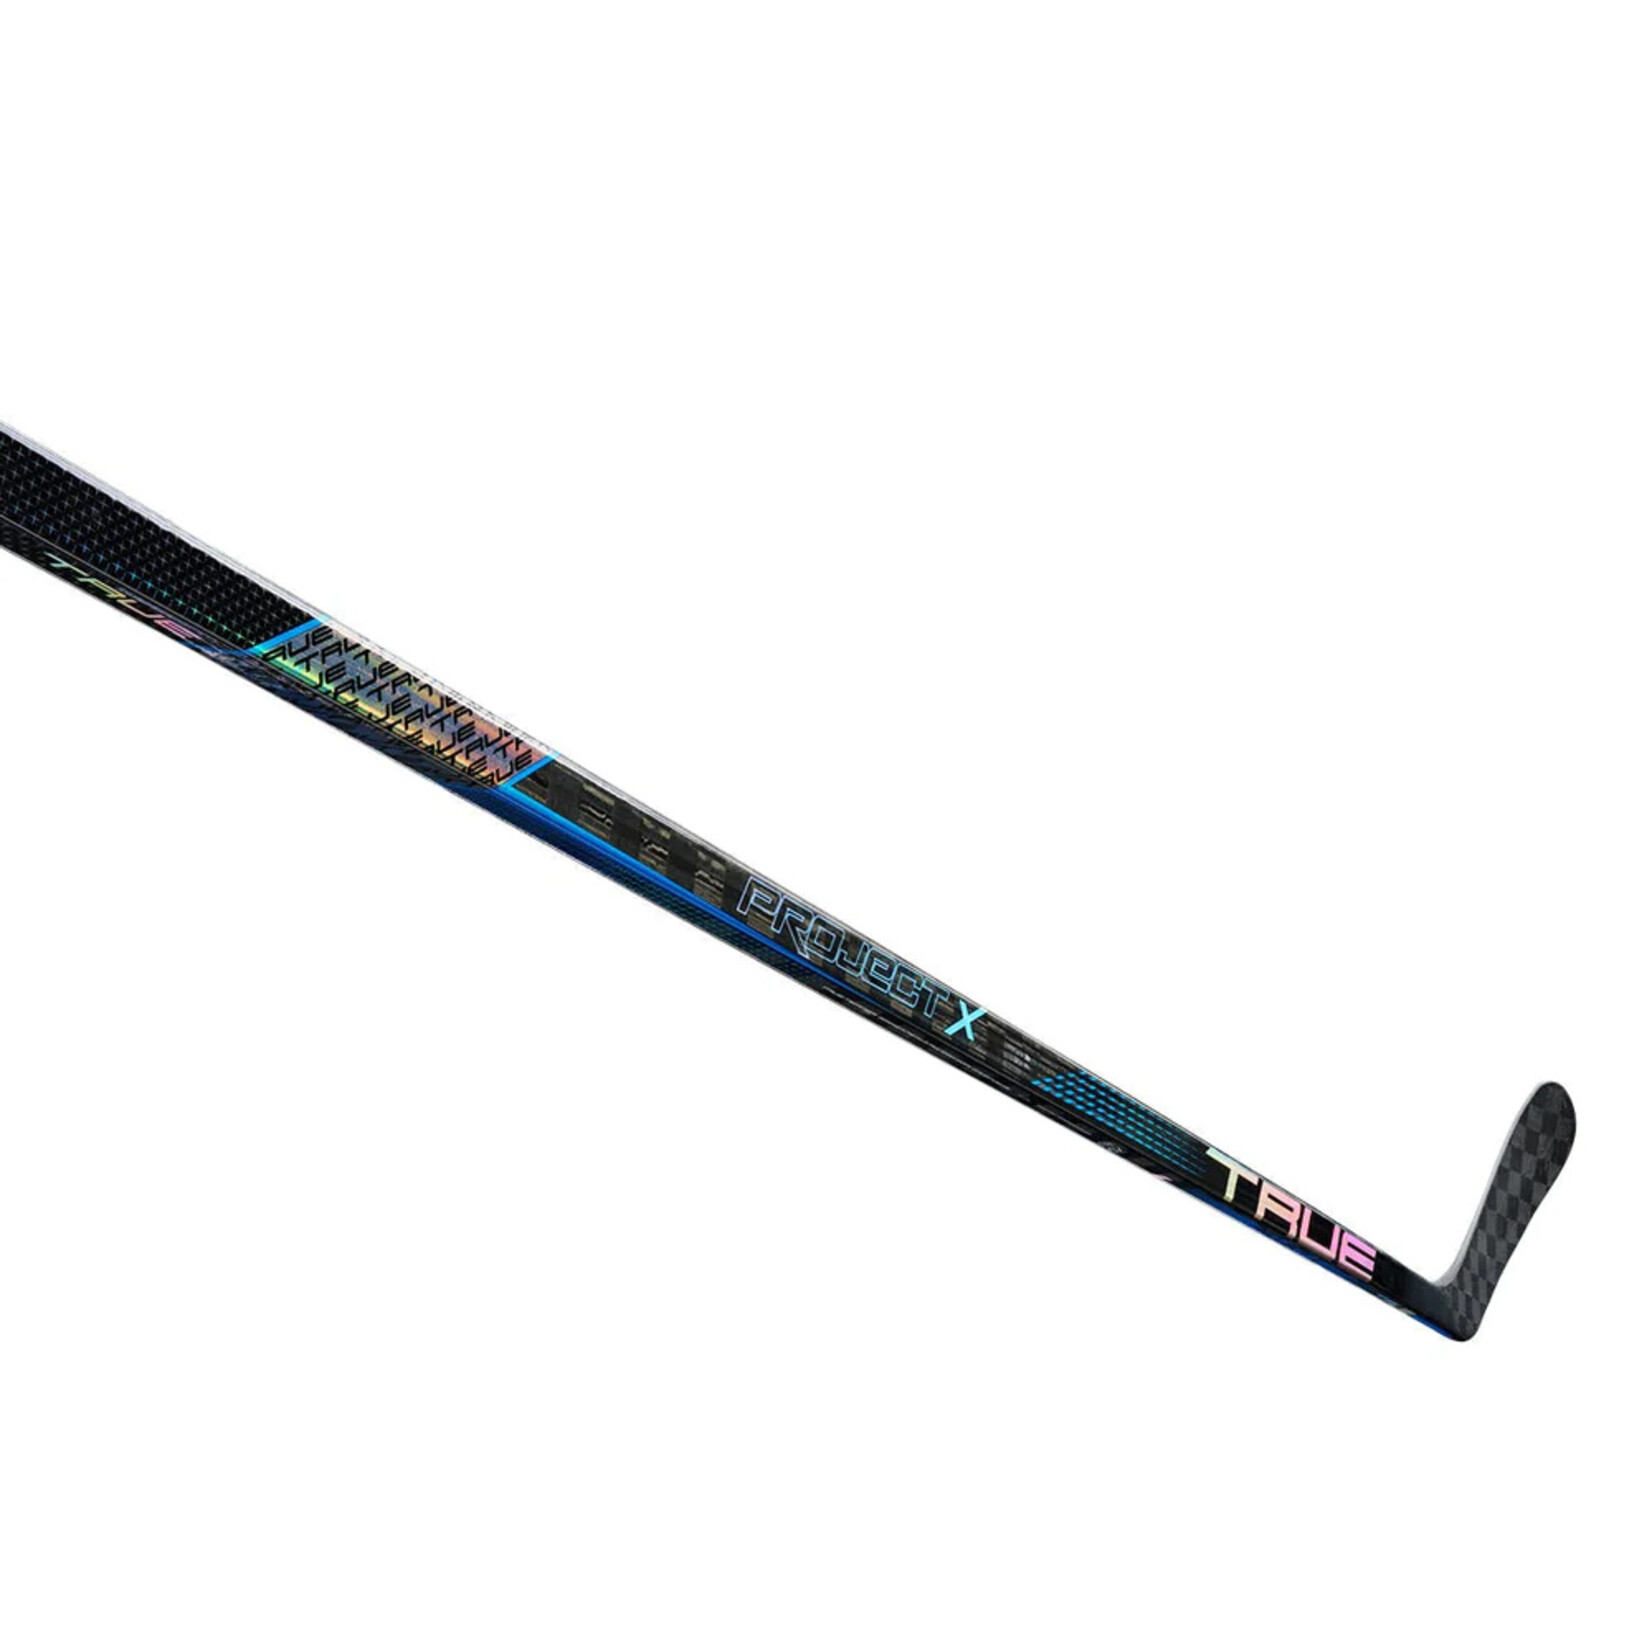 True Hockey True Hockey Stick, Project X, Senior